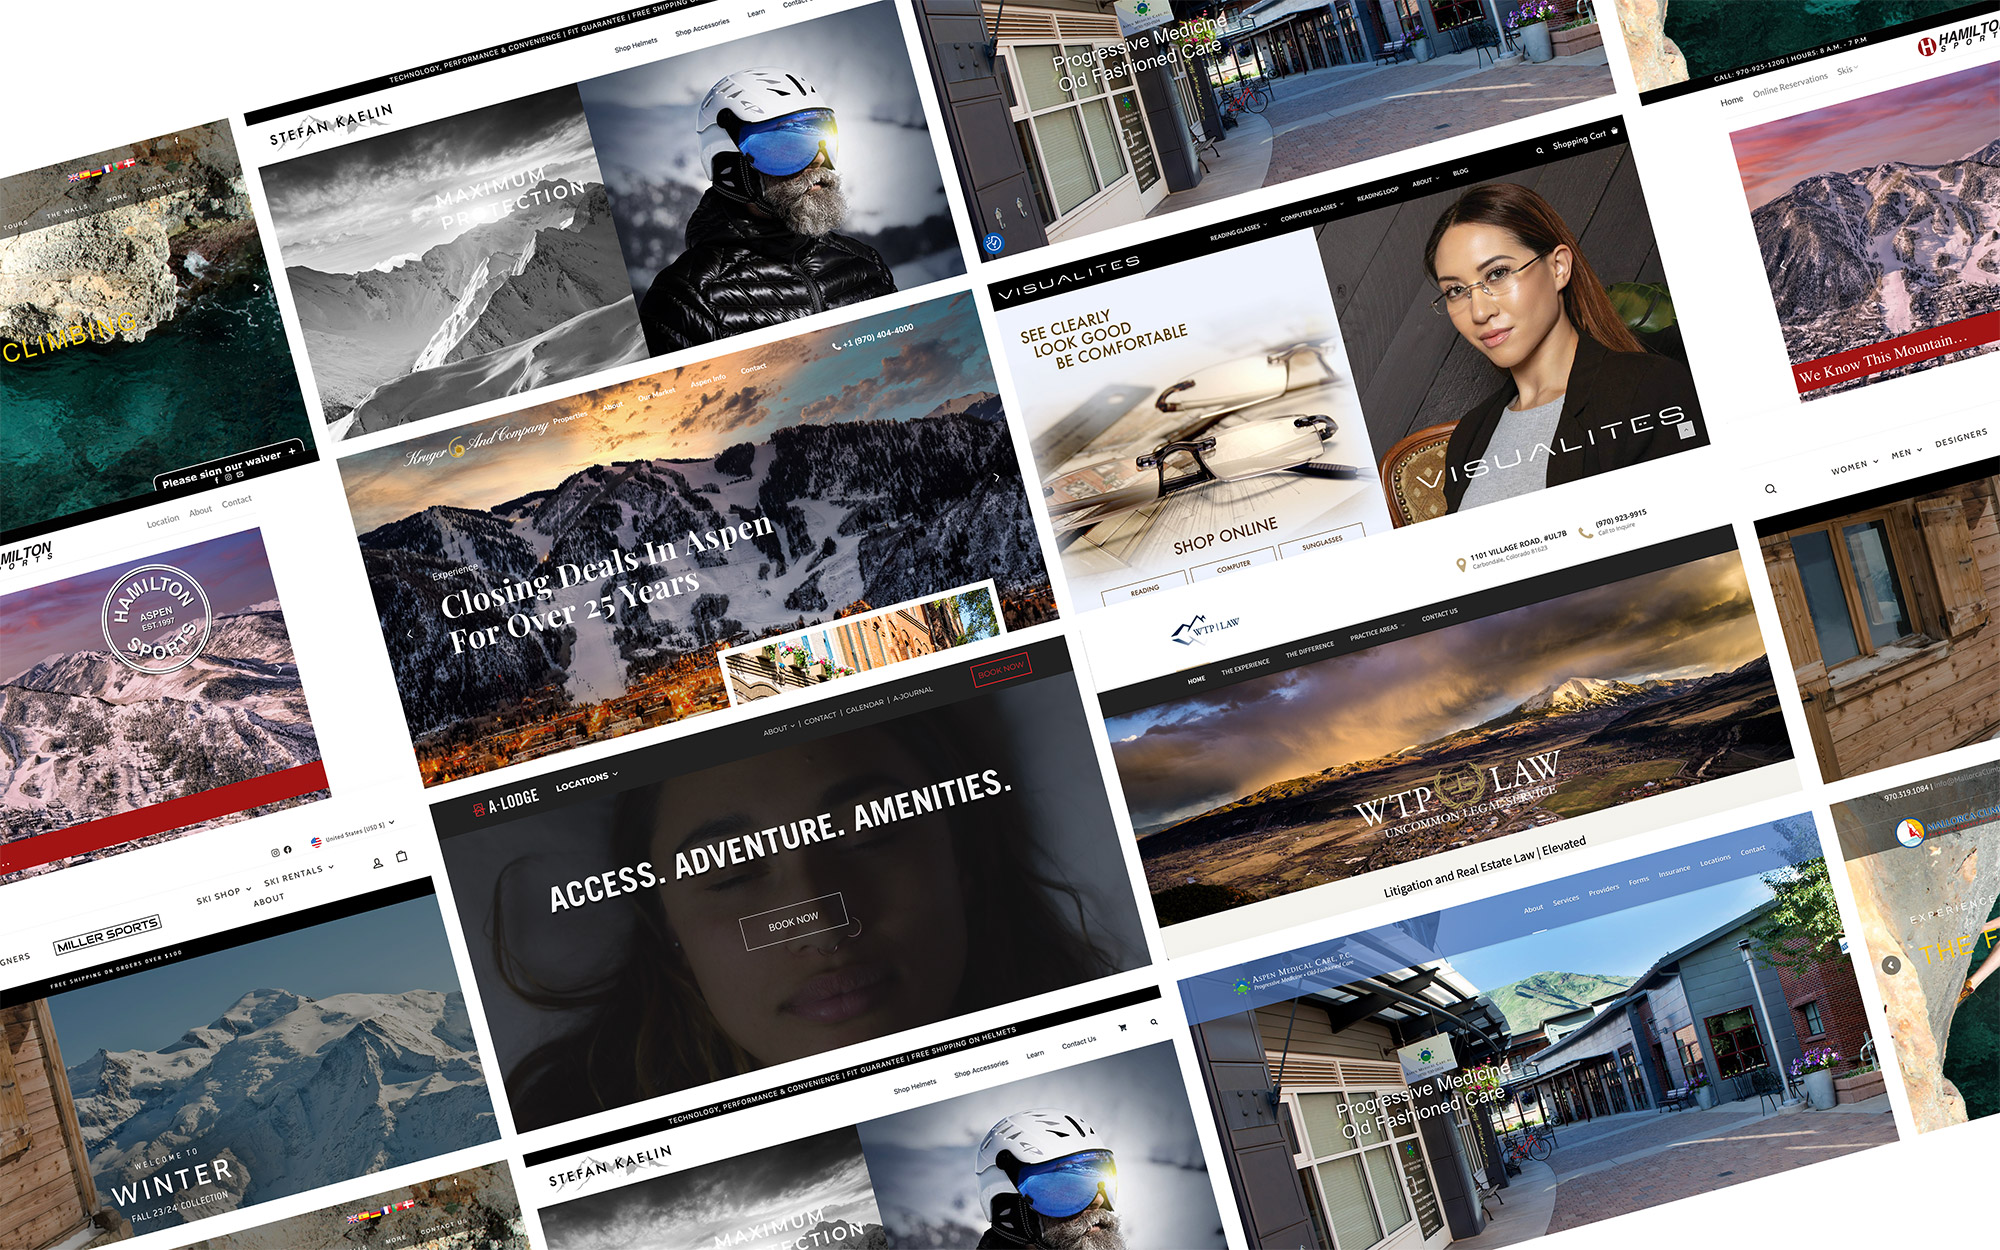 Collage of Aspen Web Design Images